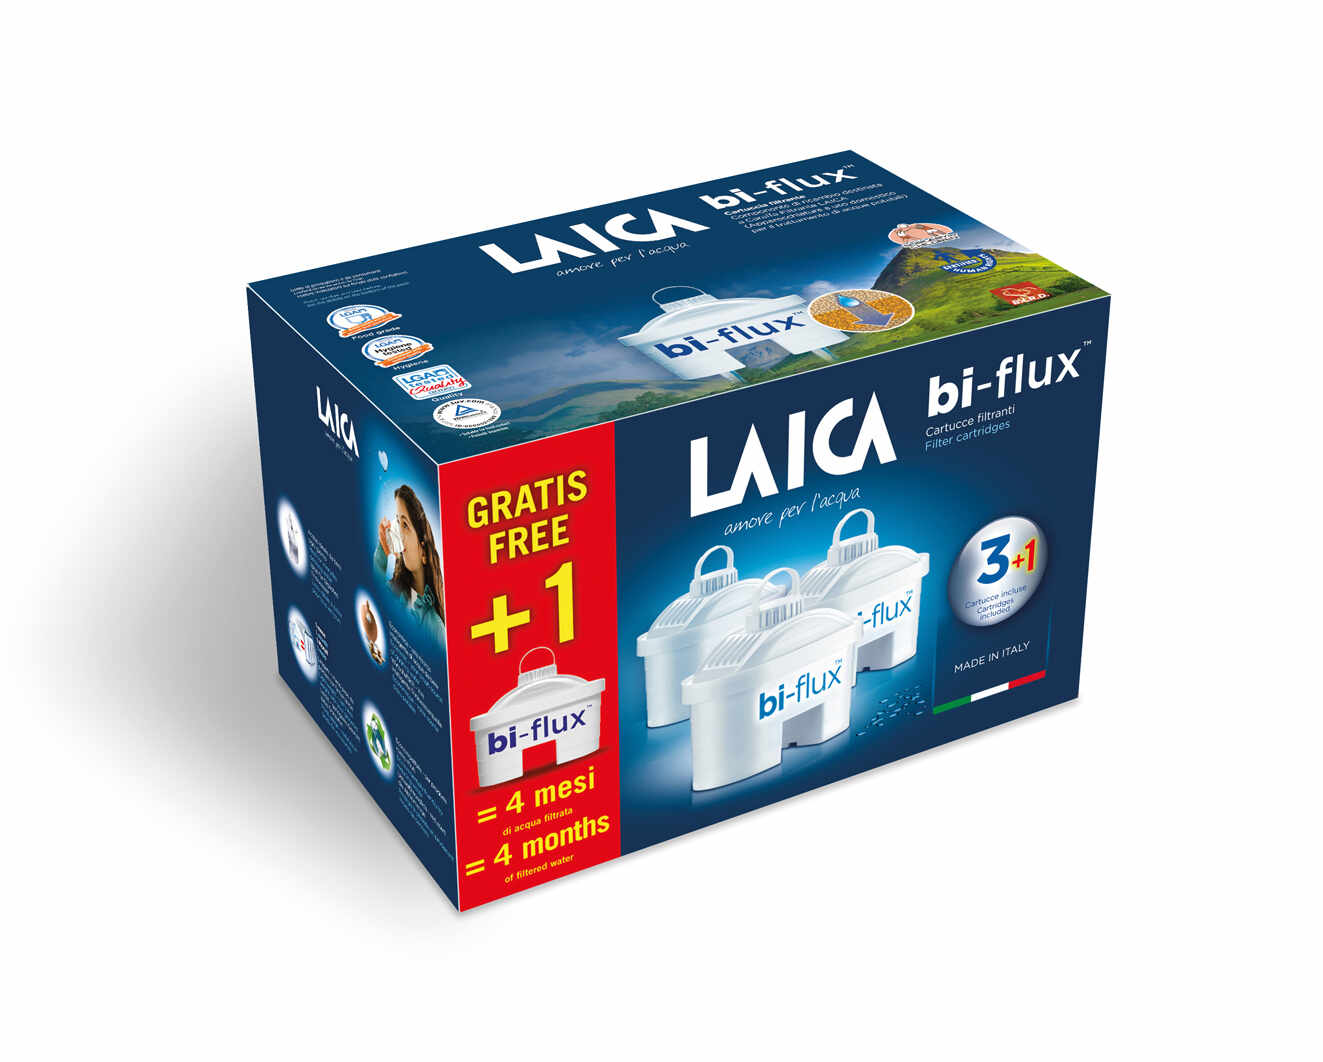 Filtre Laica Bi-Flux, pachet 3+1 bucati